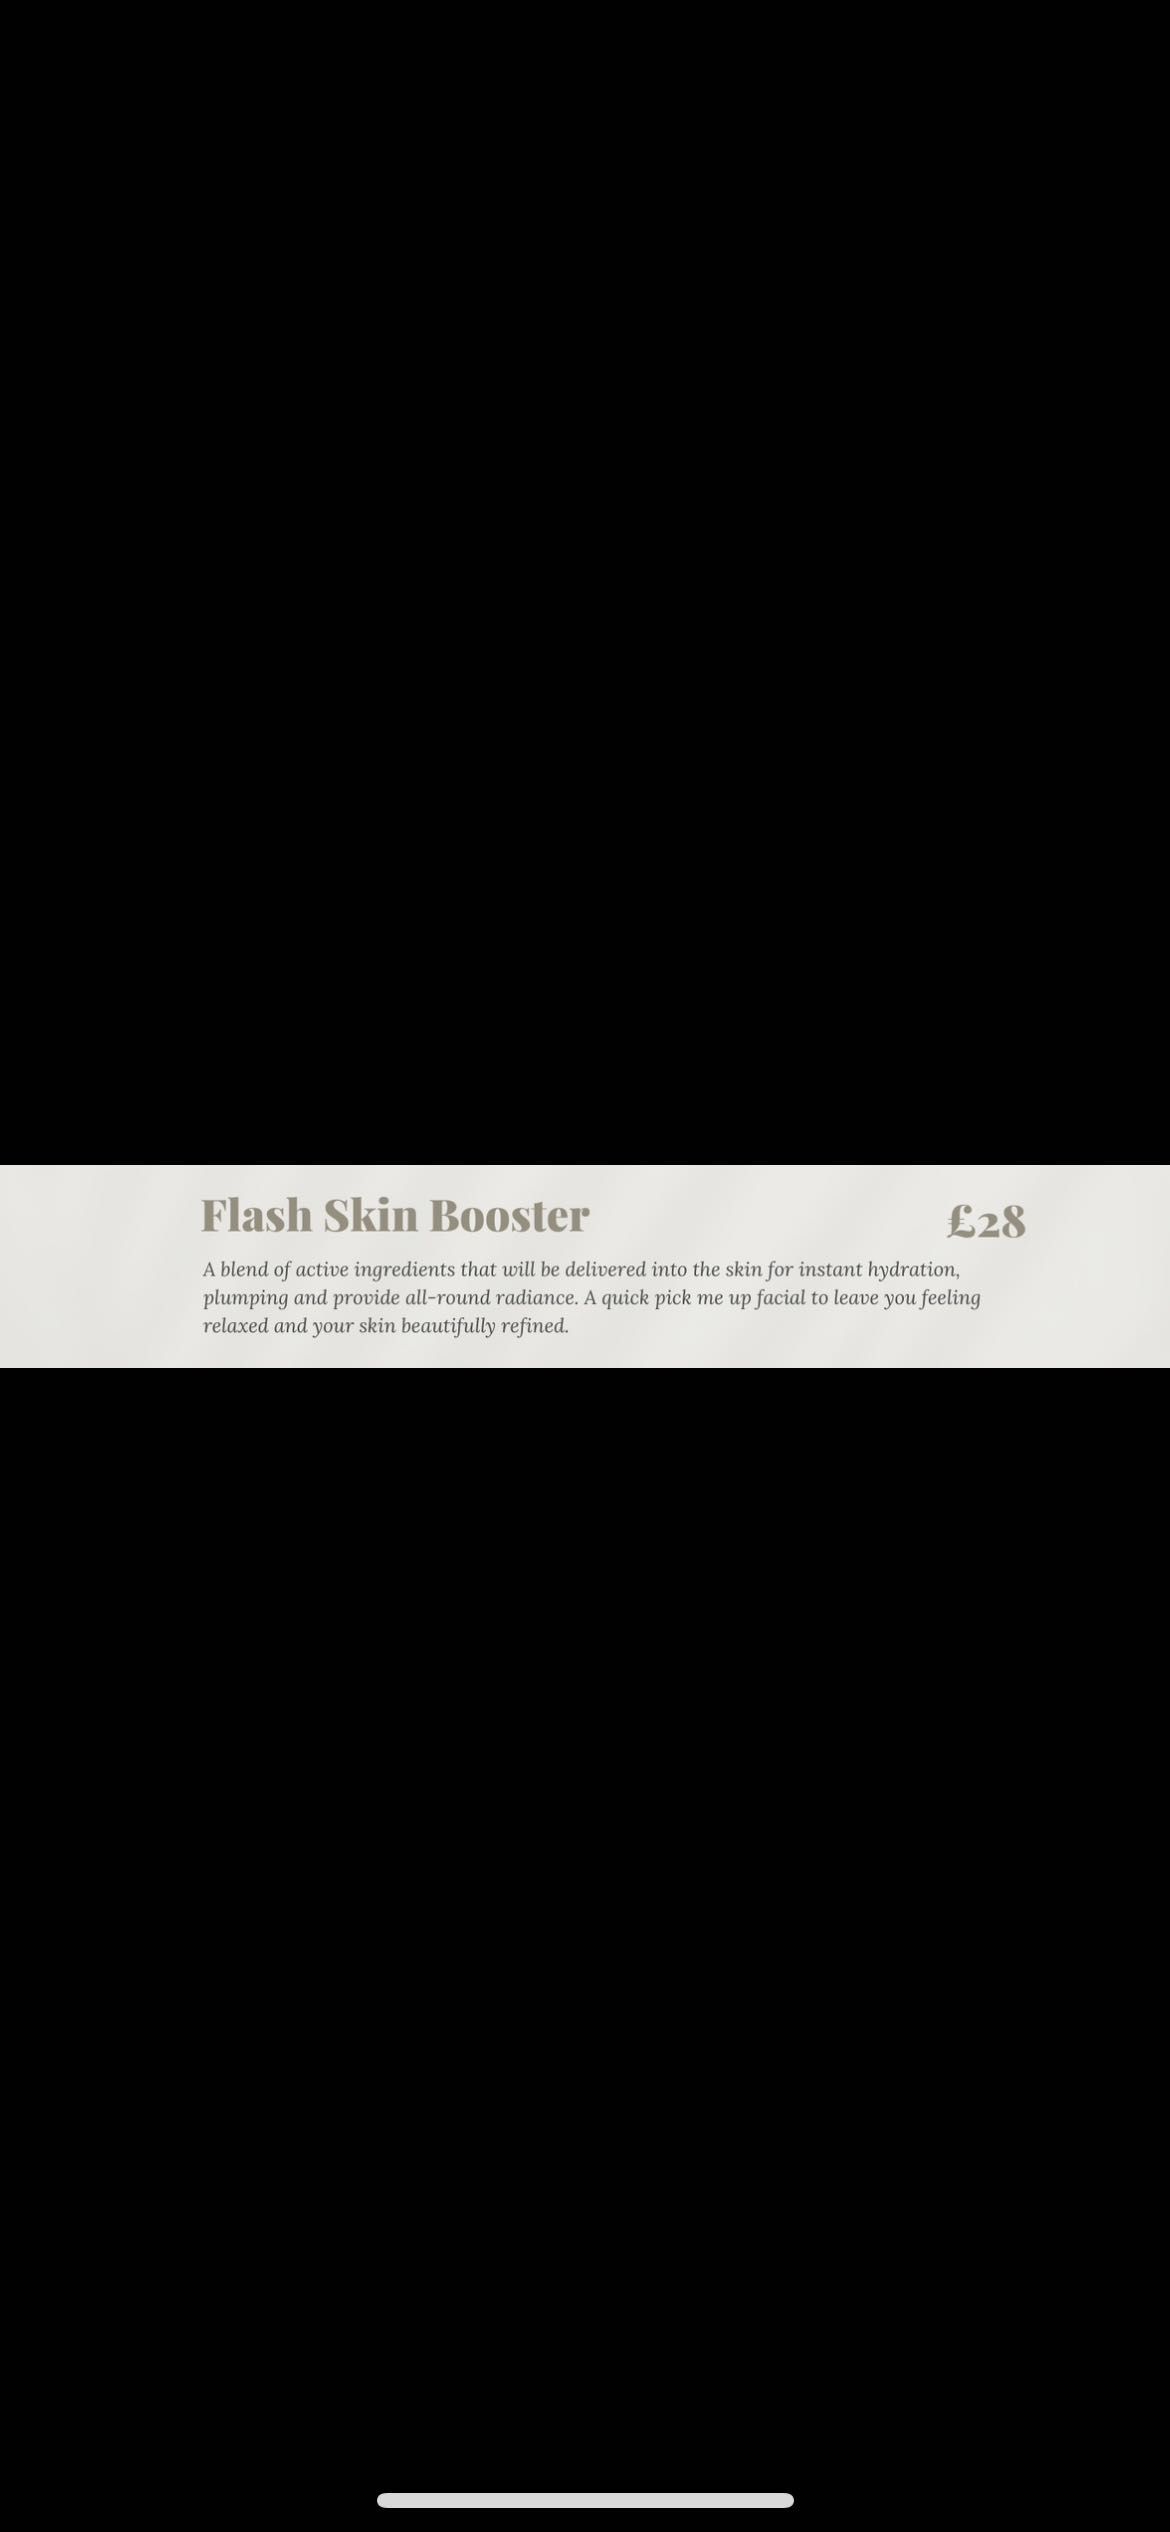 Flash Skin Booster portfolio